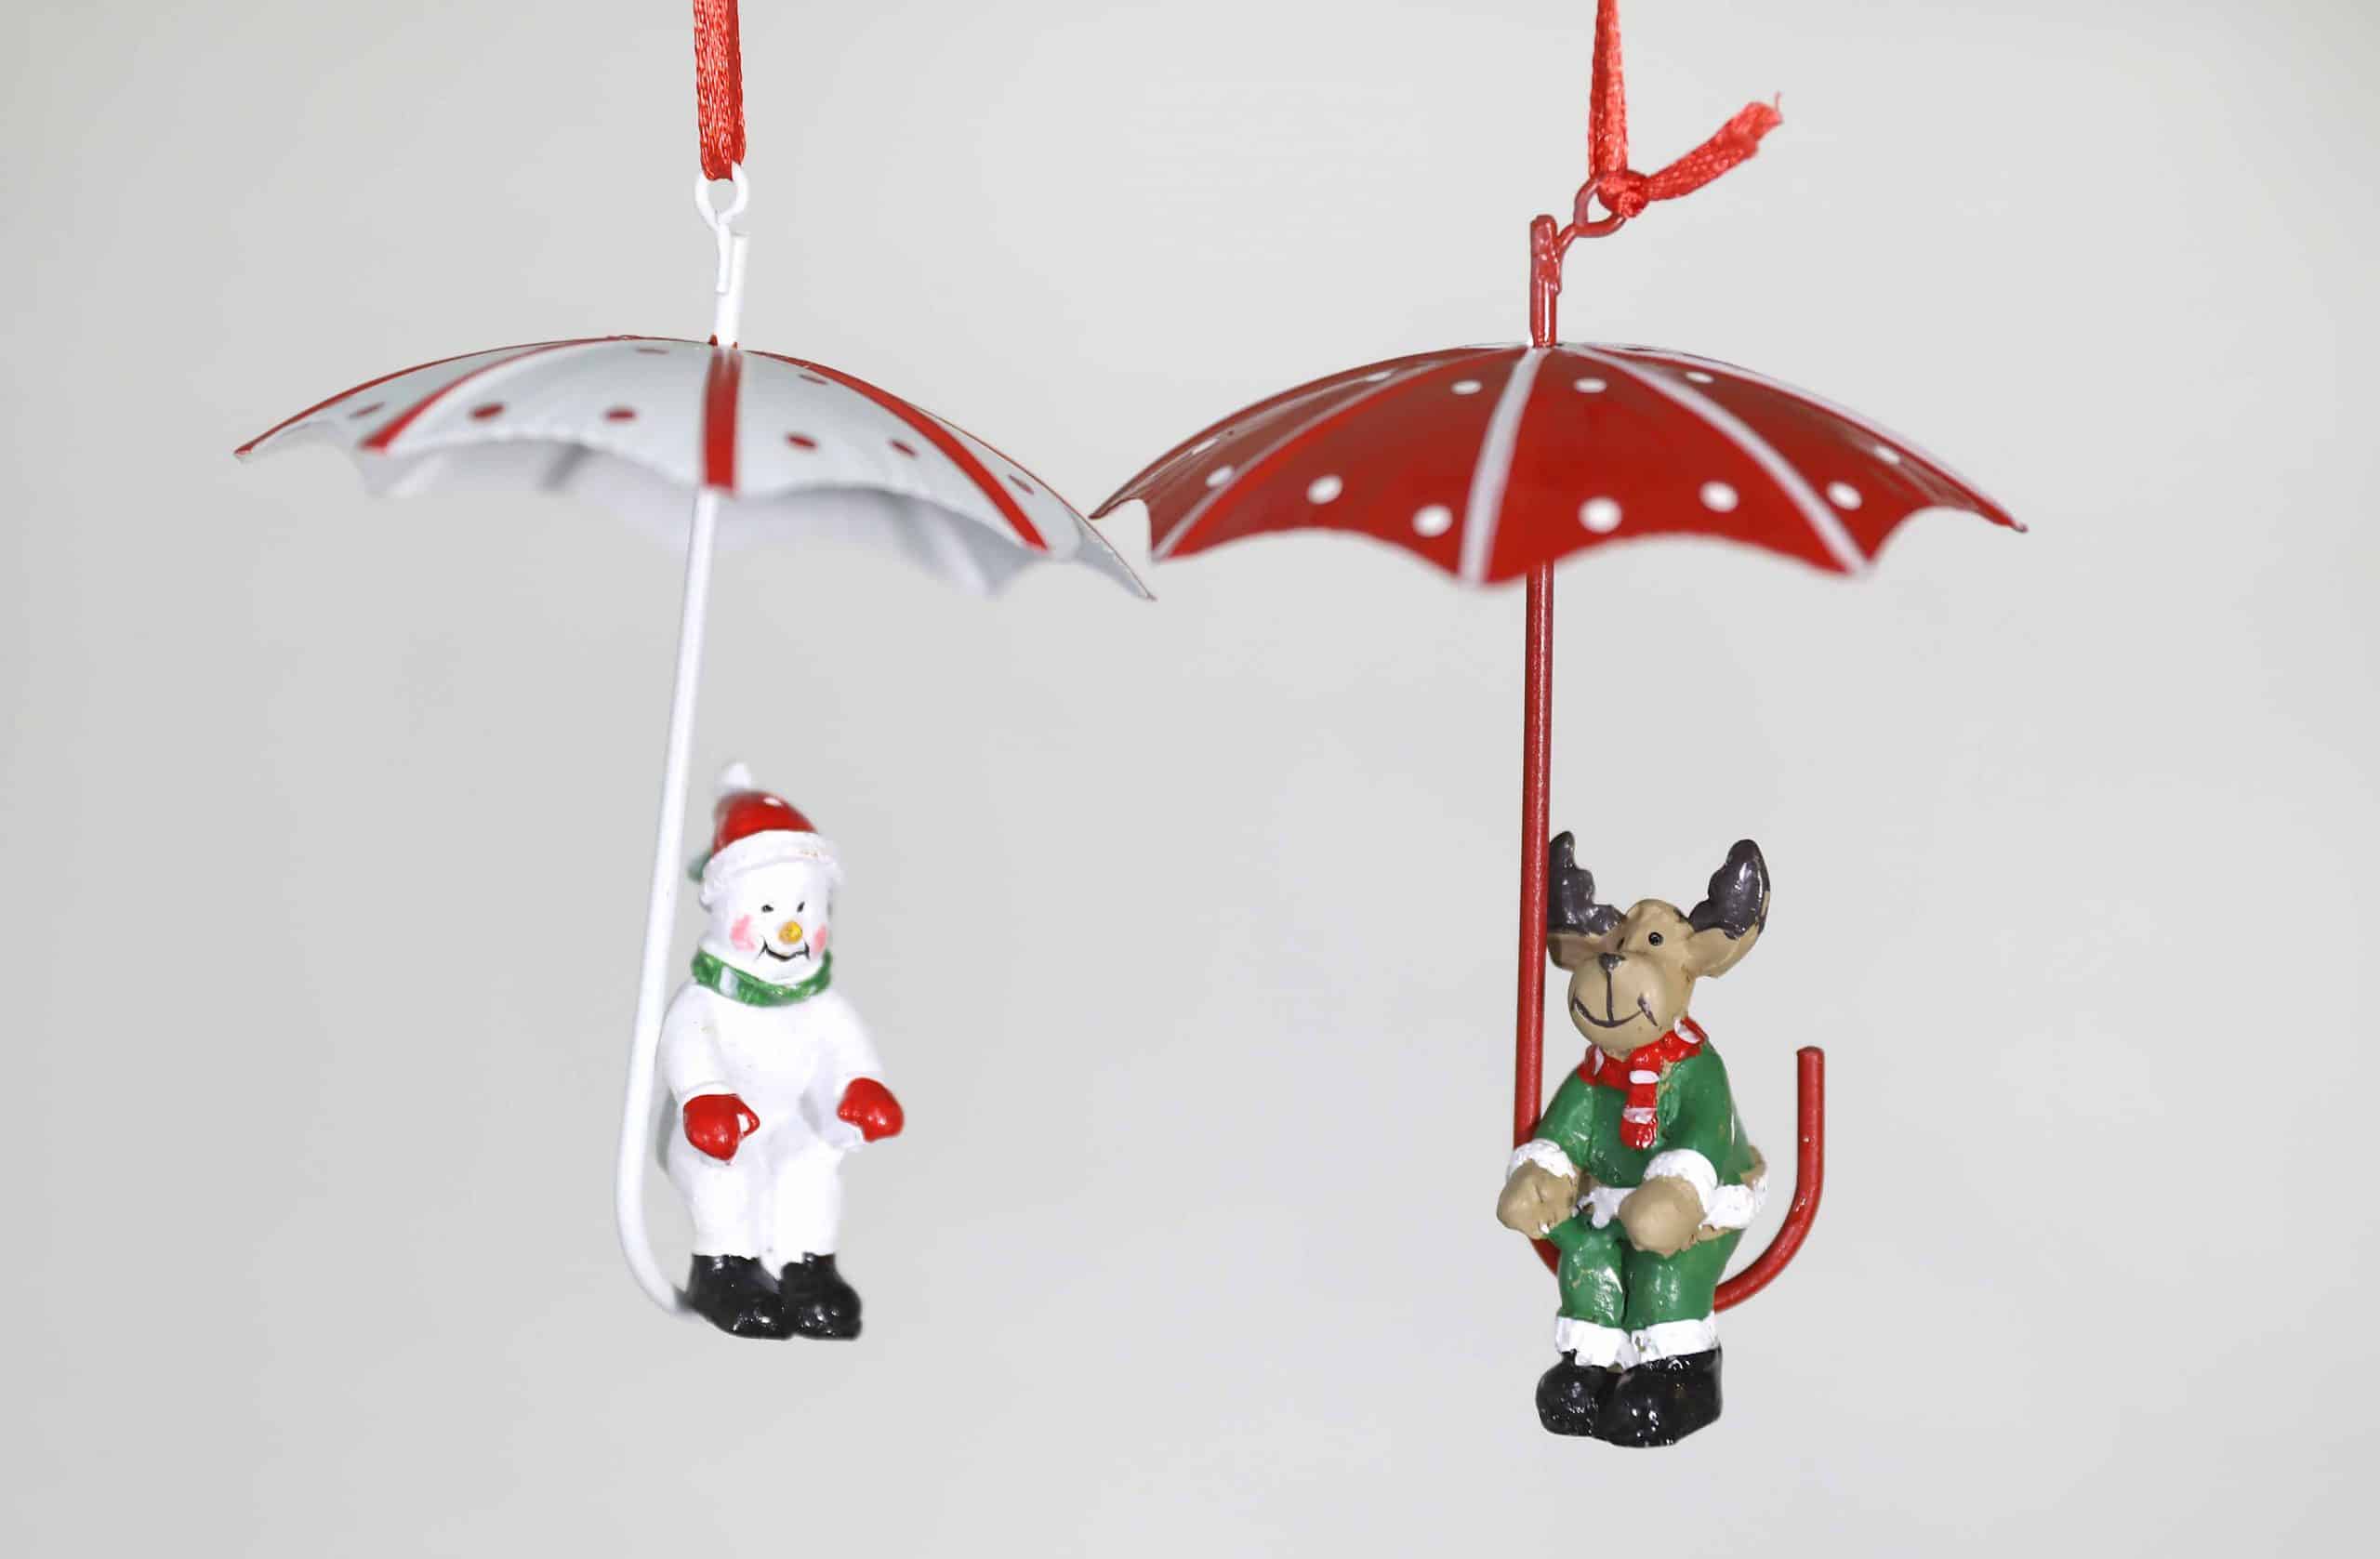 Festive Friends on Umbrellas